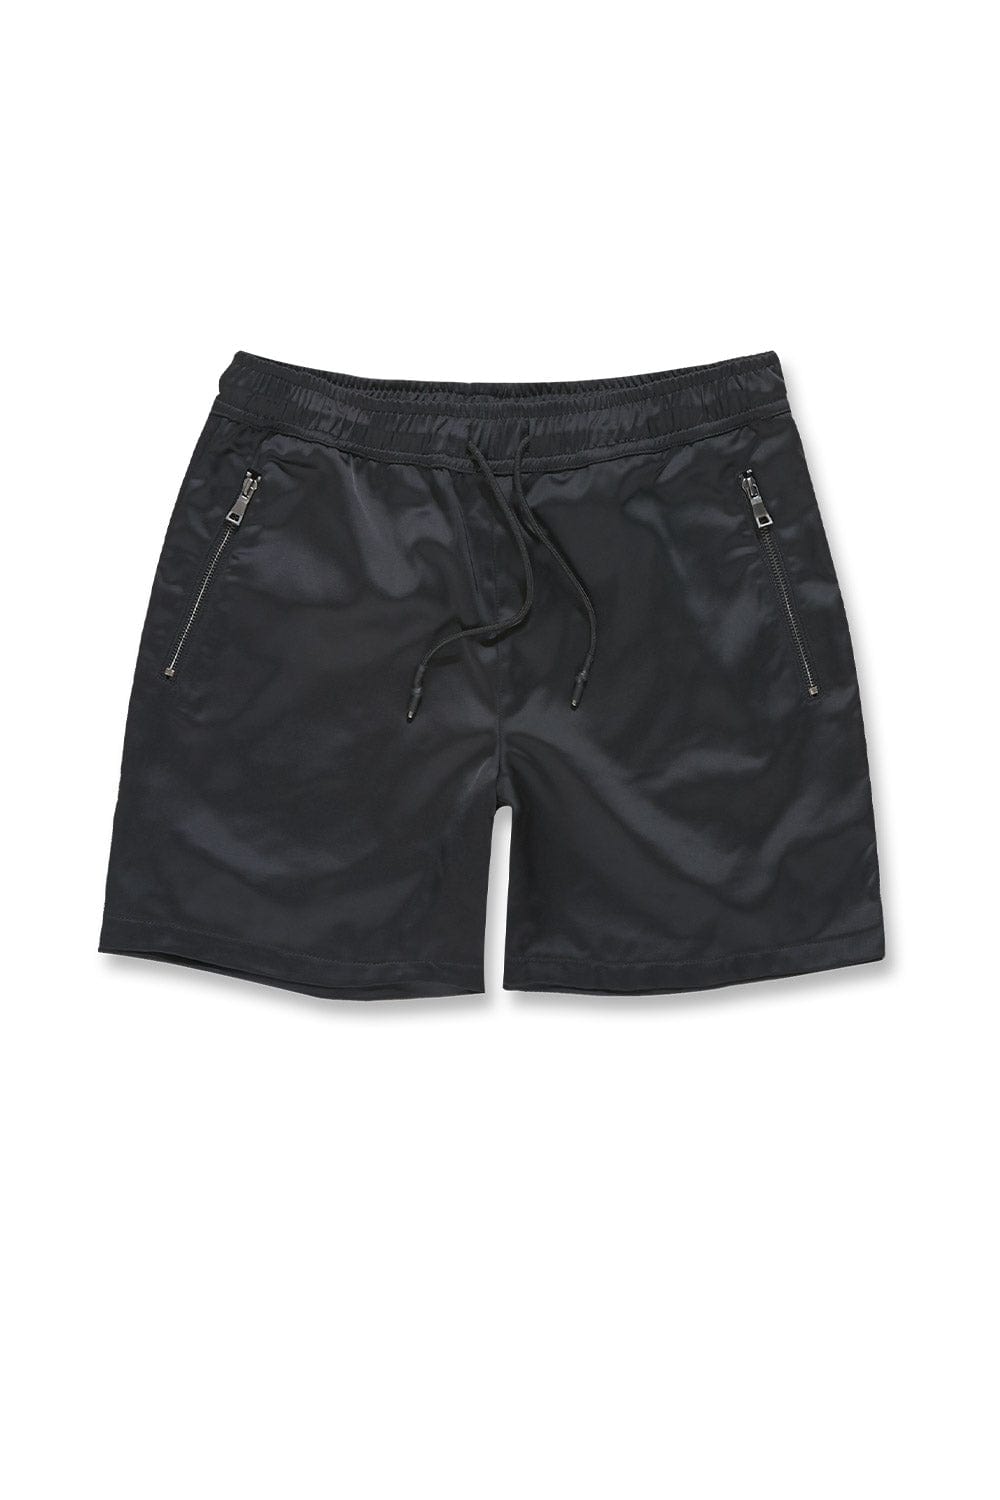 Jordan Craig Athletic - Lux Shorts Black / S